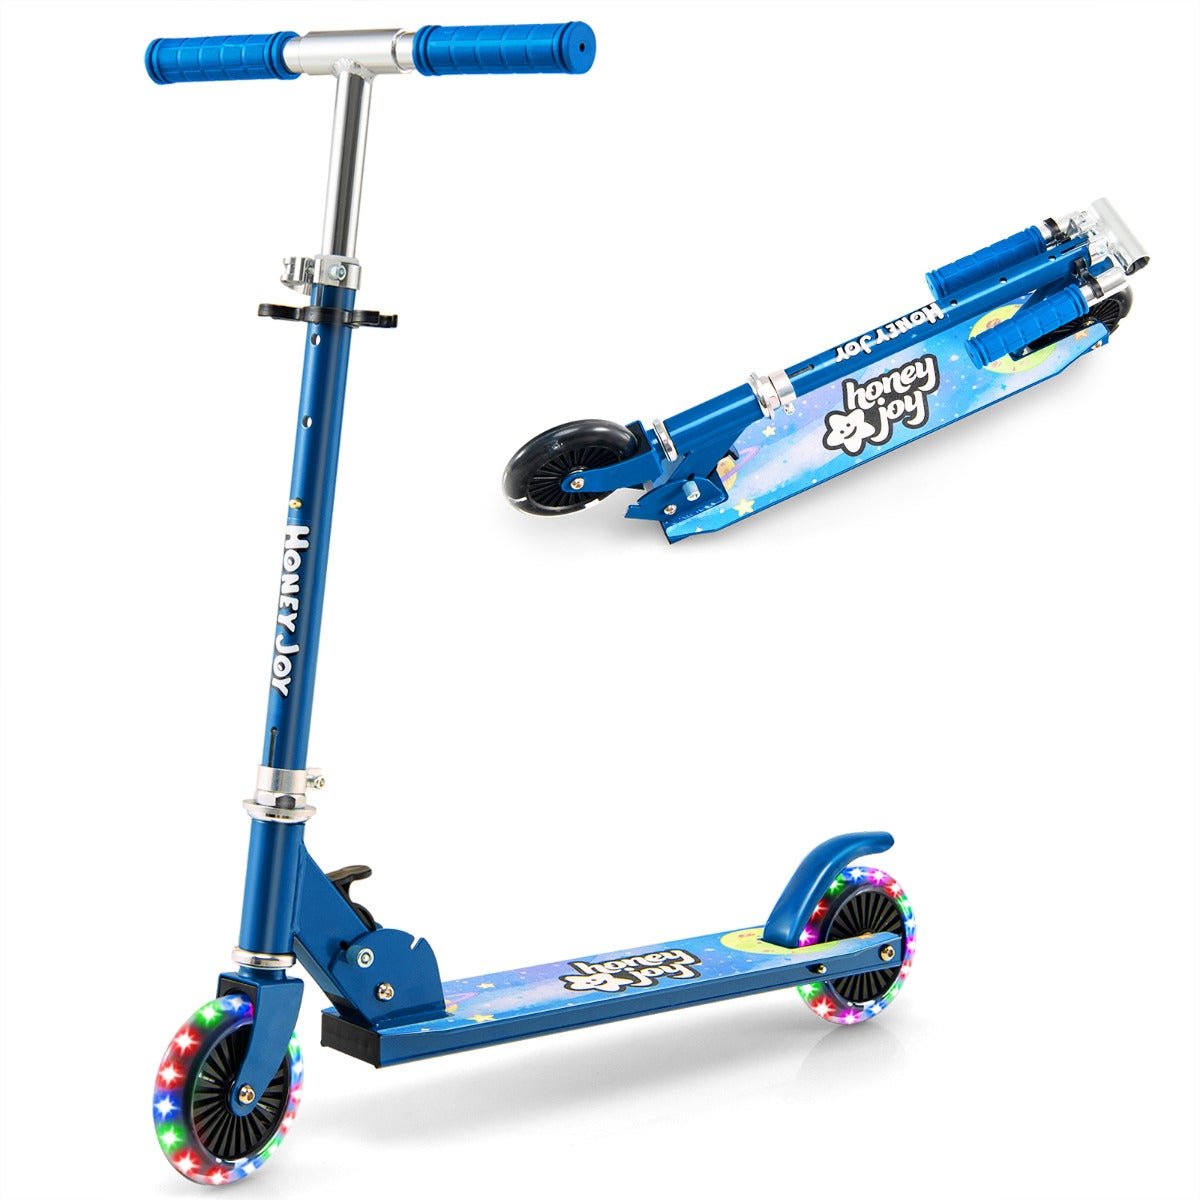 Blue Kids Foldable Scooter: Adjustable Height, LED Light, and Lightweight Design